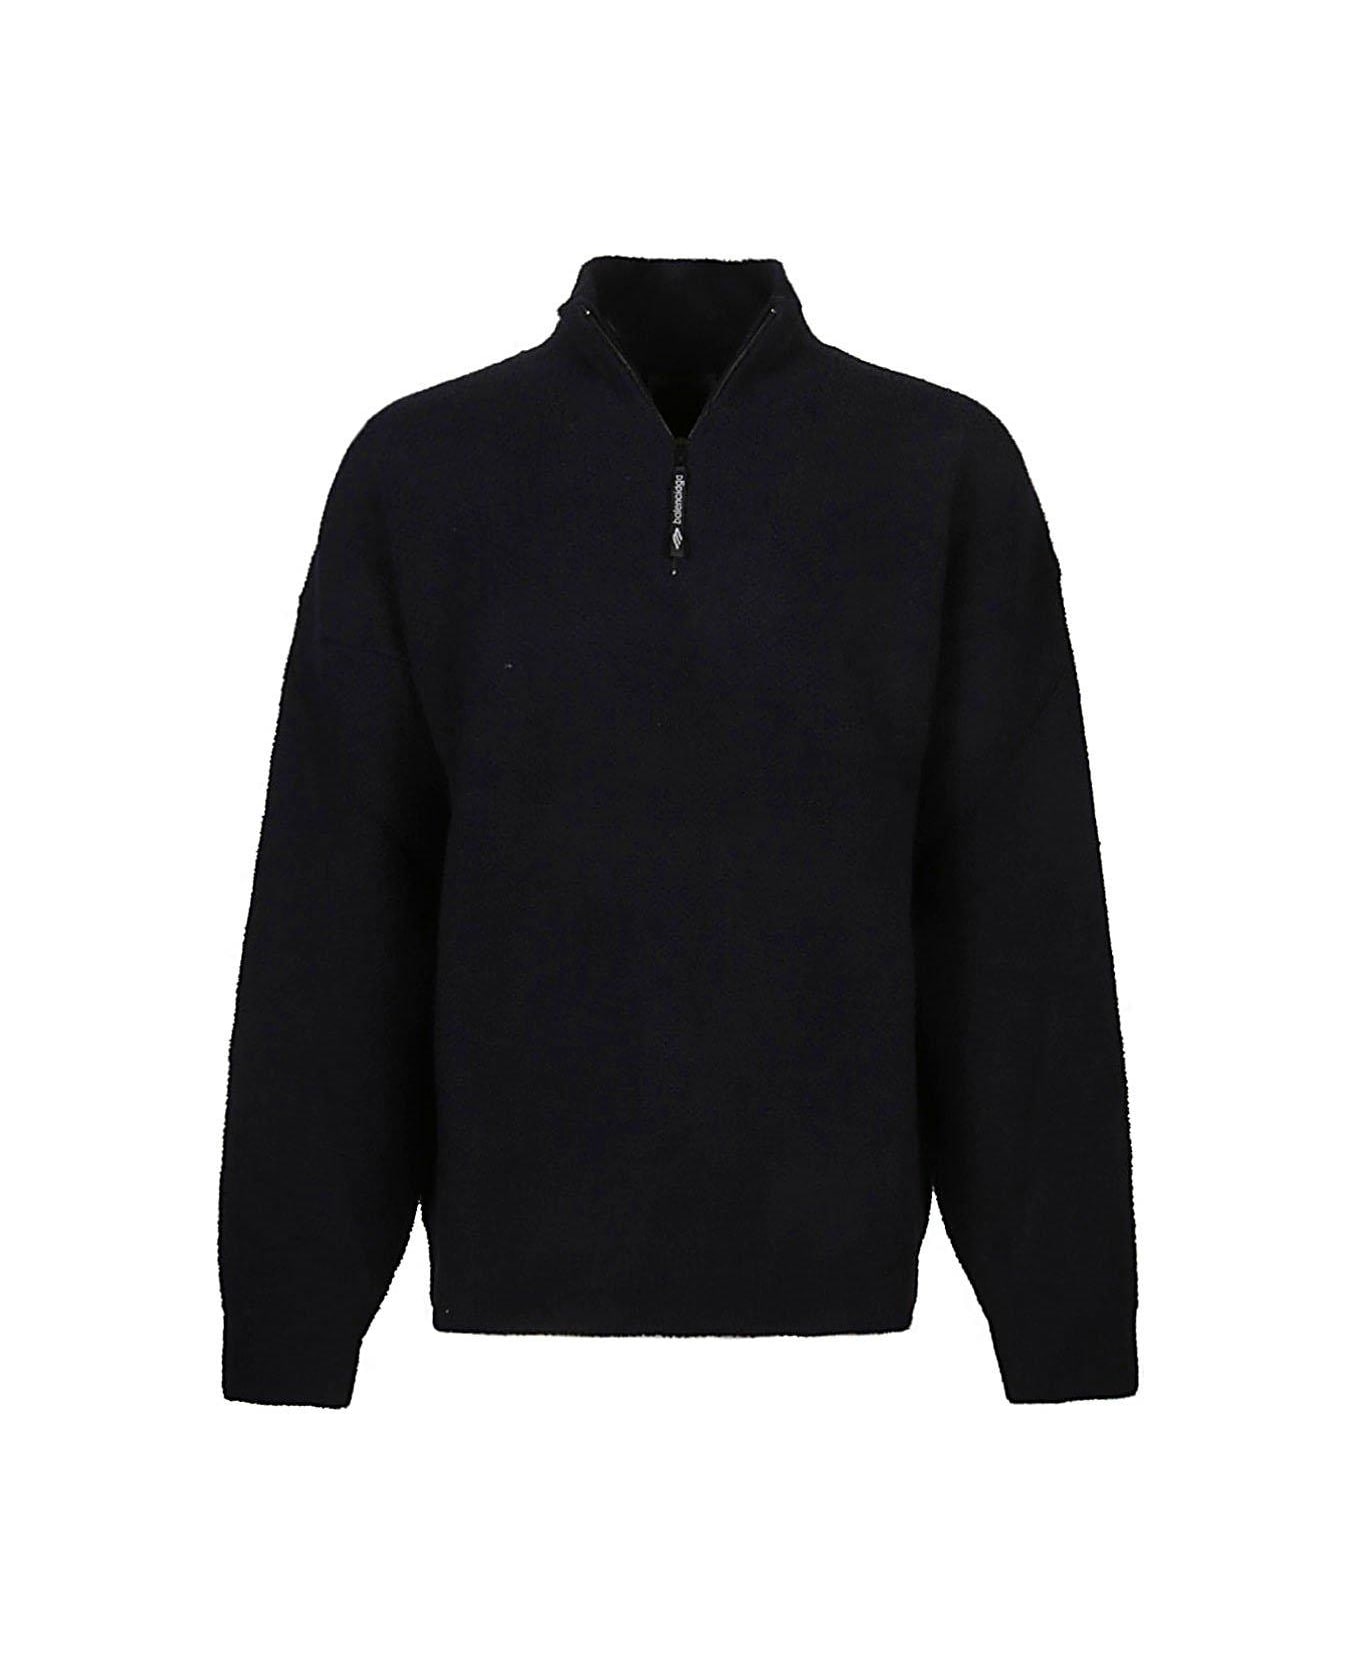 Balenciaga Quarter-zip Knit Sweater - BLACK ニットウェア